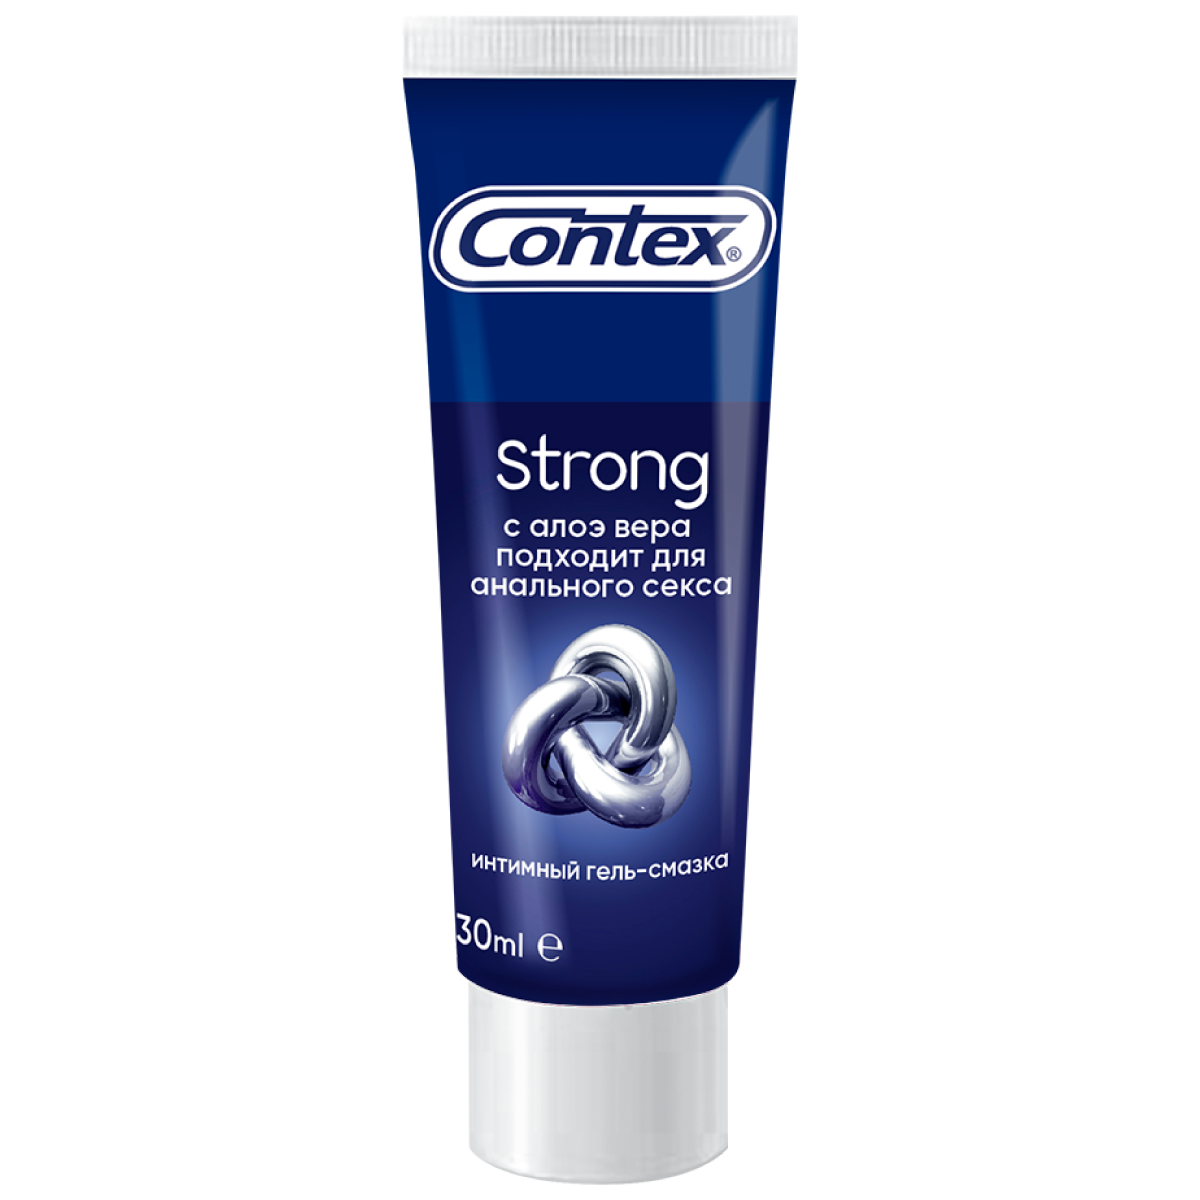 Contex Strong, гель-смазка, 30 мл contex extra large презервативы xxl 3 3 шт